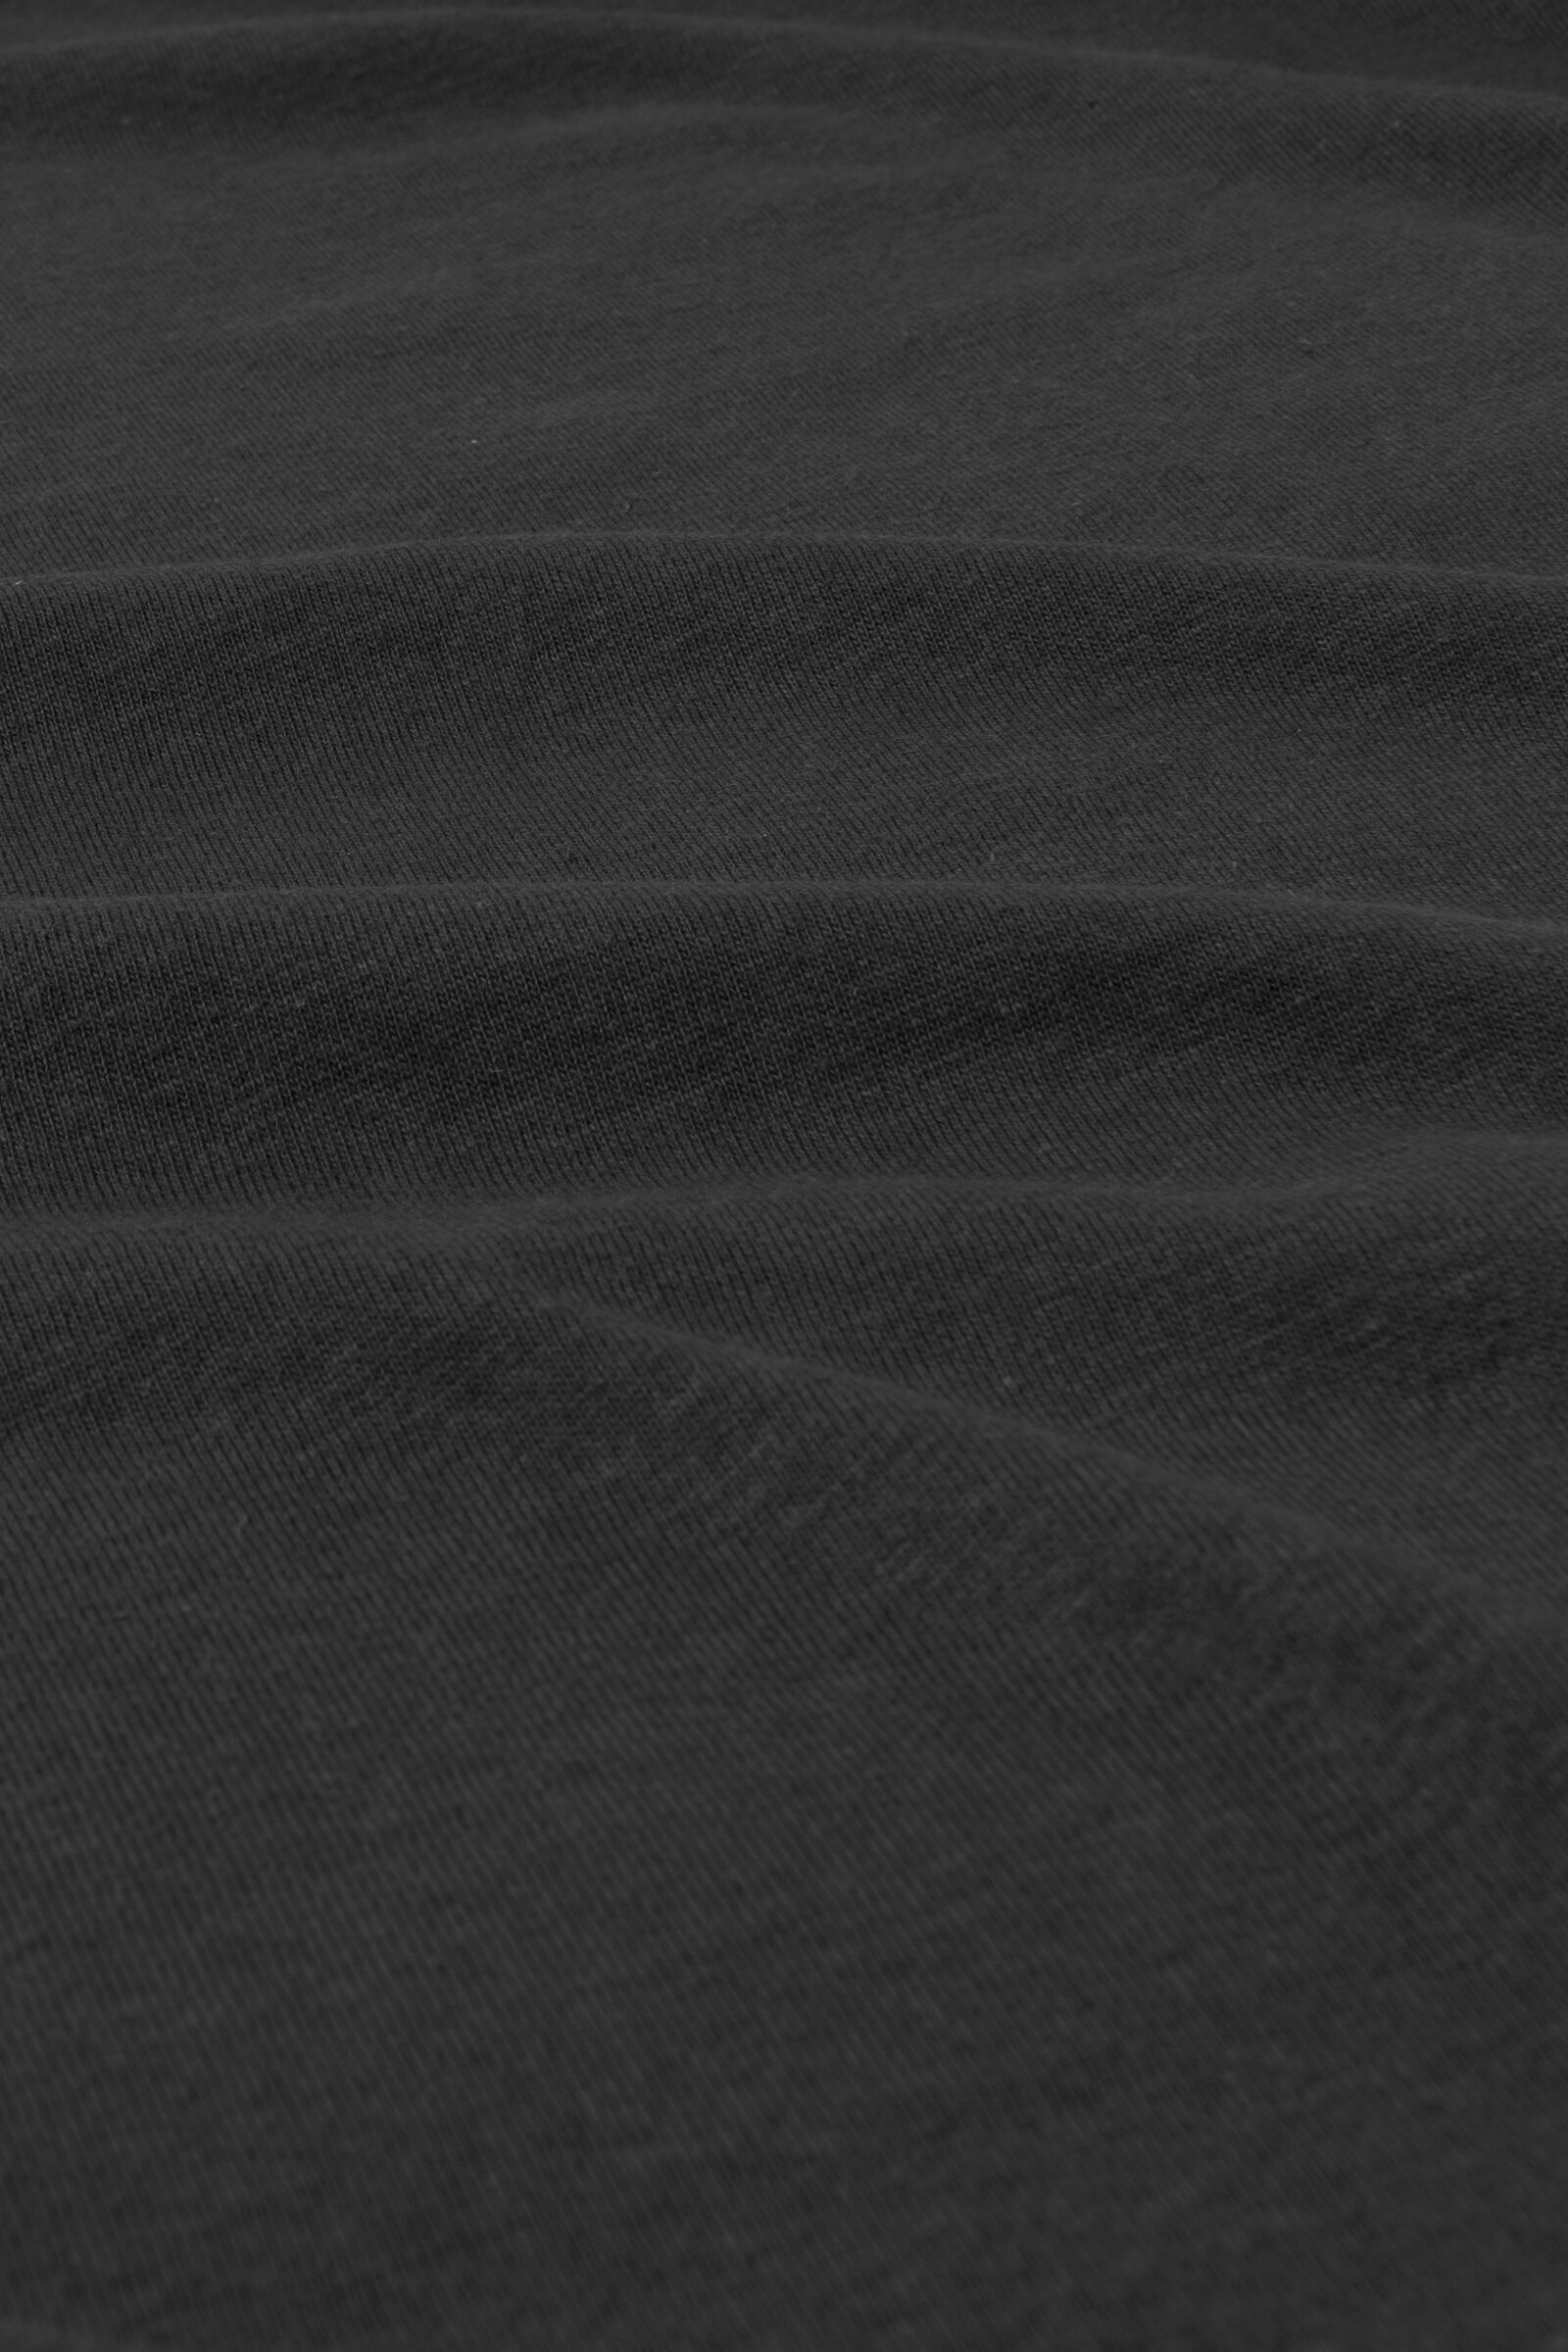 Topper-Spannbettlaken, 180 x 220 cm, Soft Cotton, dunkelgrau - 5120074 - HEMA